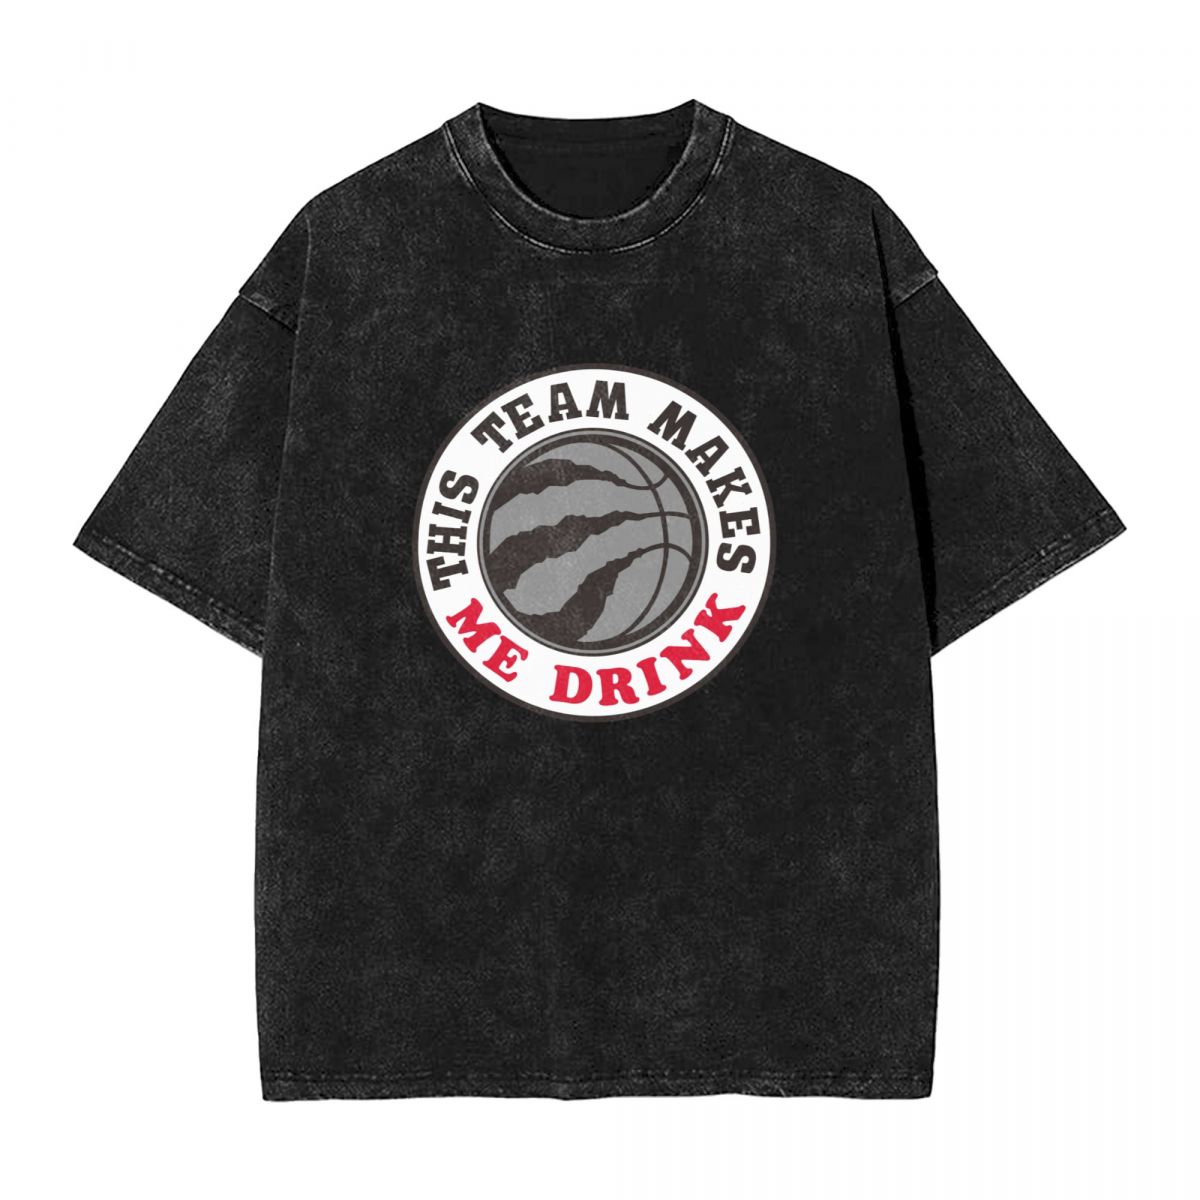 Toronto Raptors This Team Makes Me Drink Men's Oversized Streetwear Tee Shirts